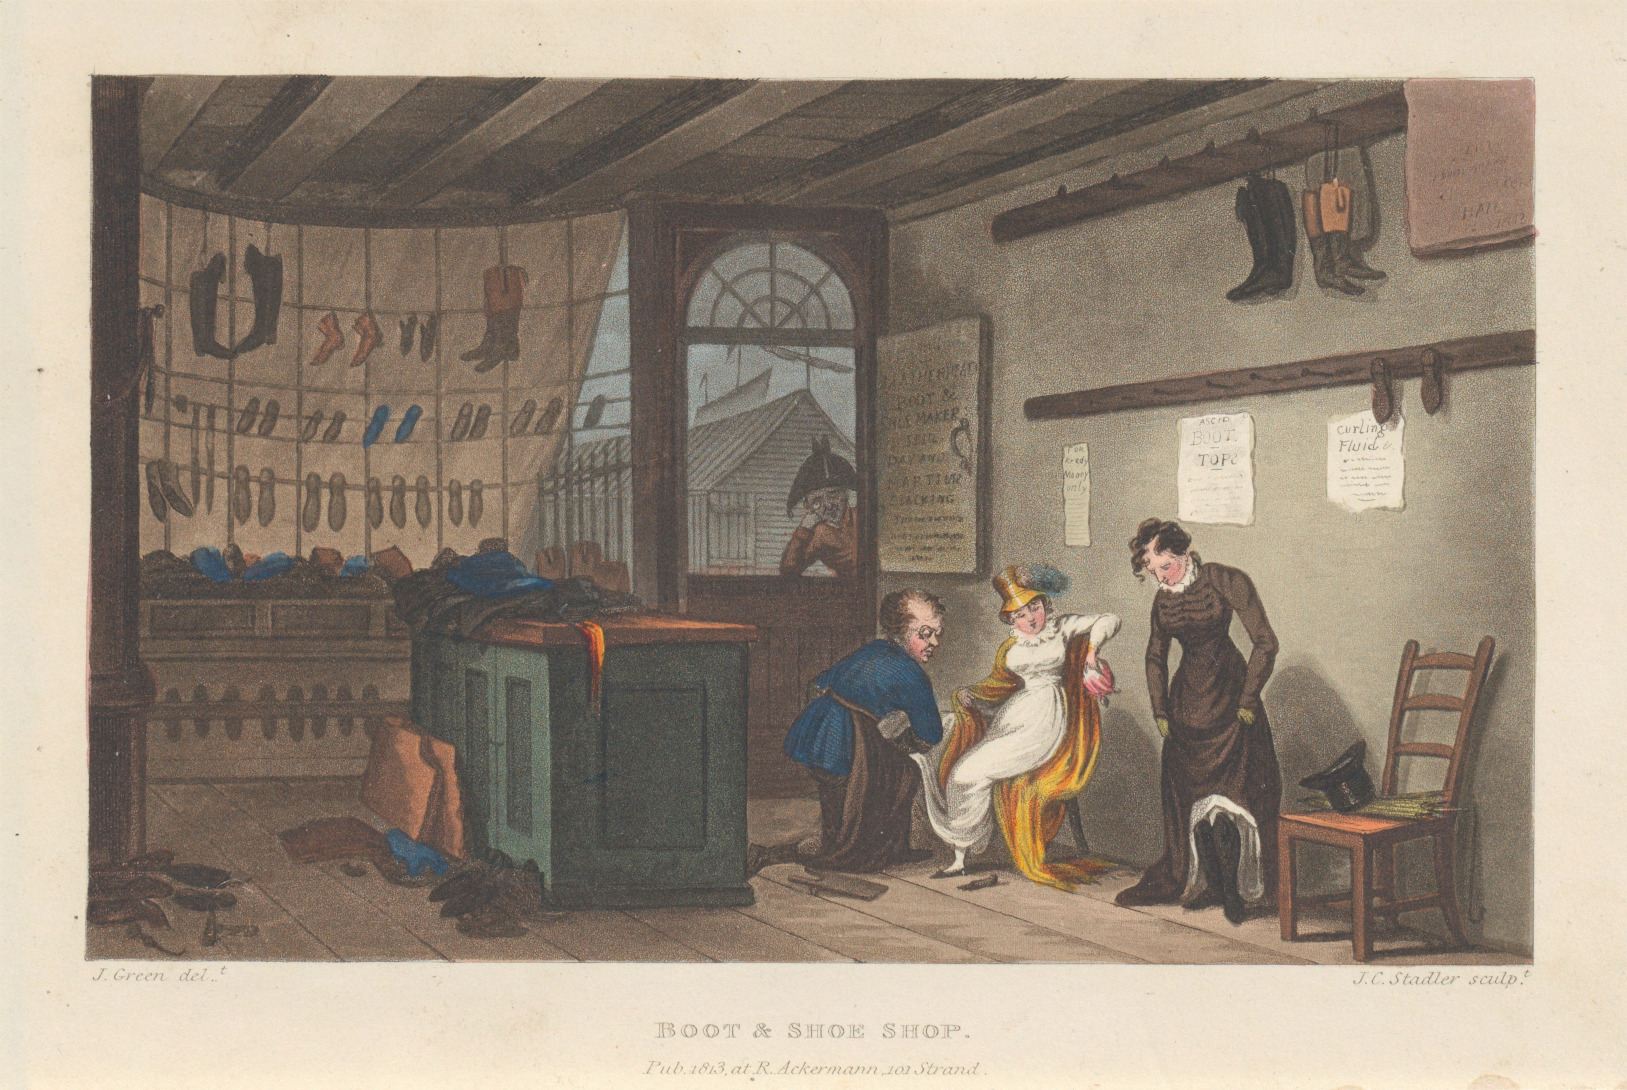 “Boot & Shoe Shop", de "Poetical Sketches of Scarborough”, por Thomas Rowlandson (1813)